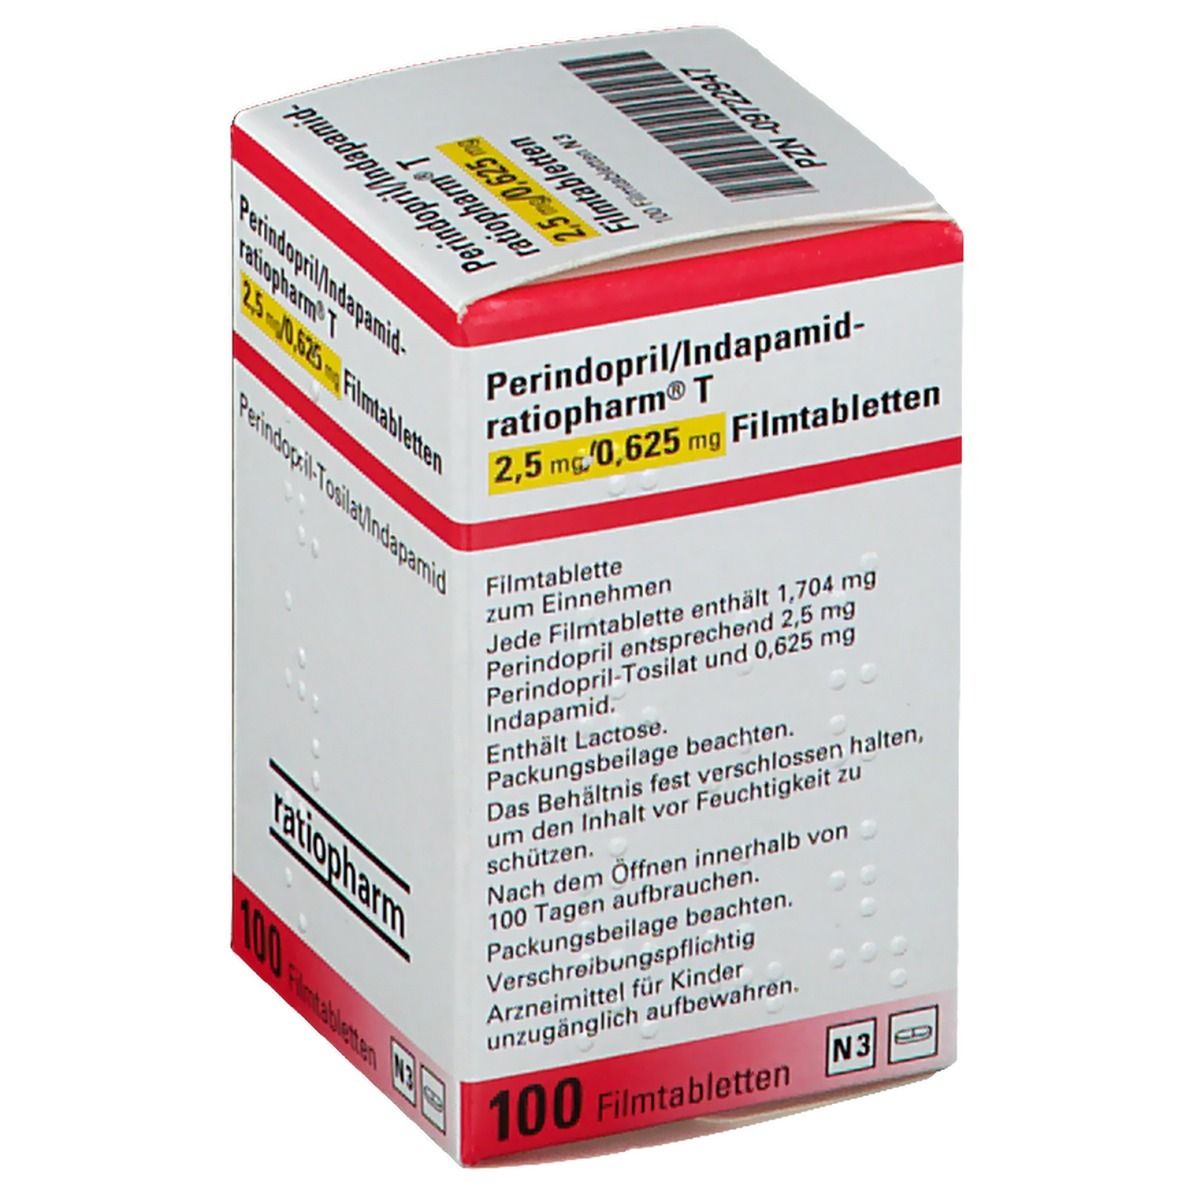 Perindopril/Indapamid-ratiopharm® T 2,5 mg/0,625 mg